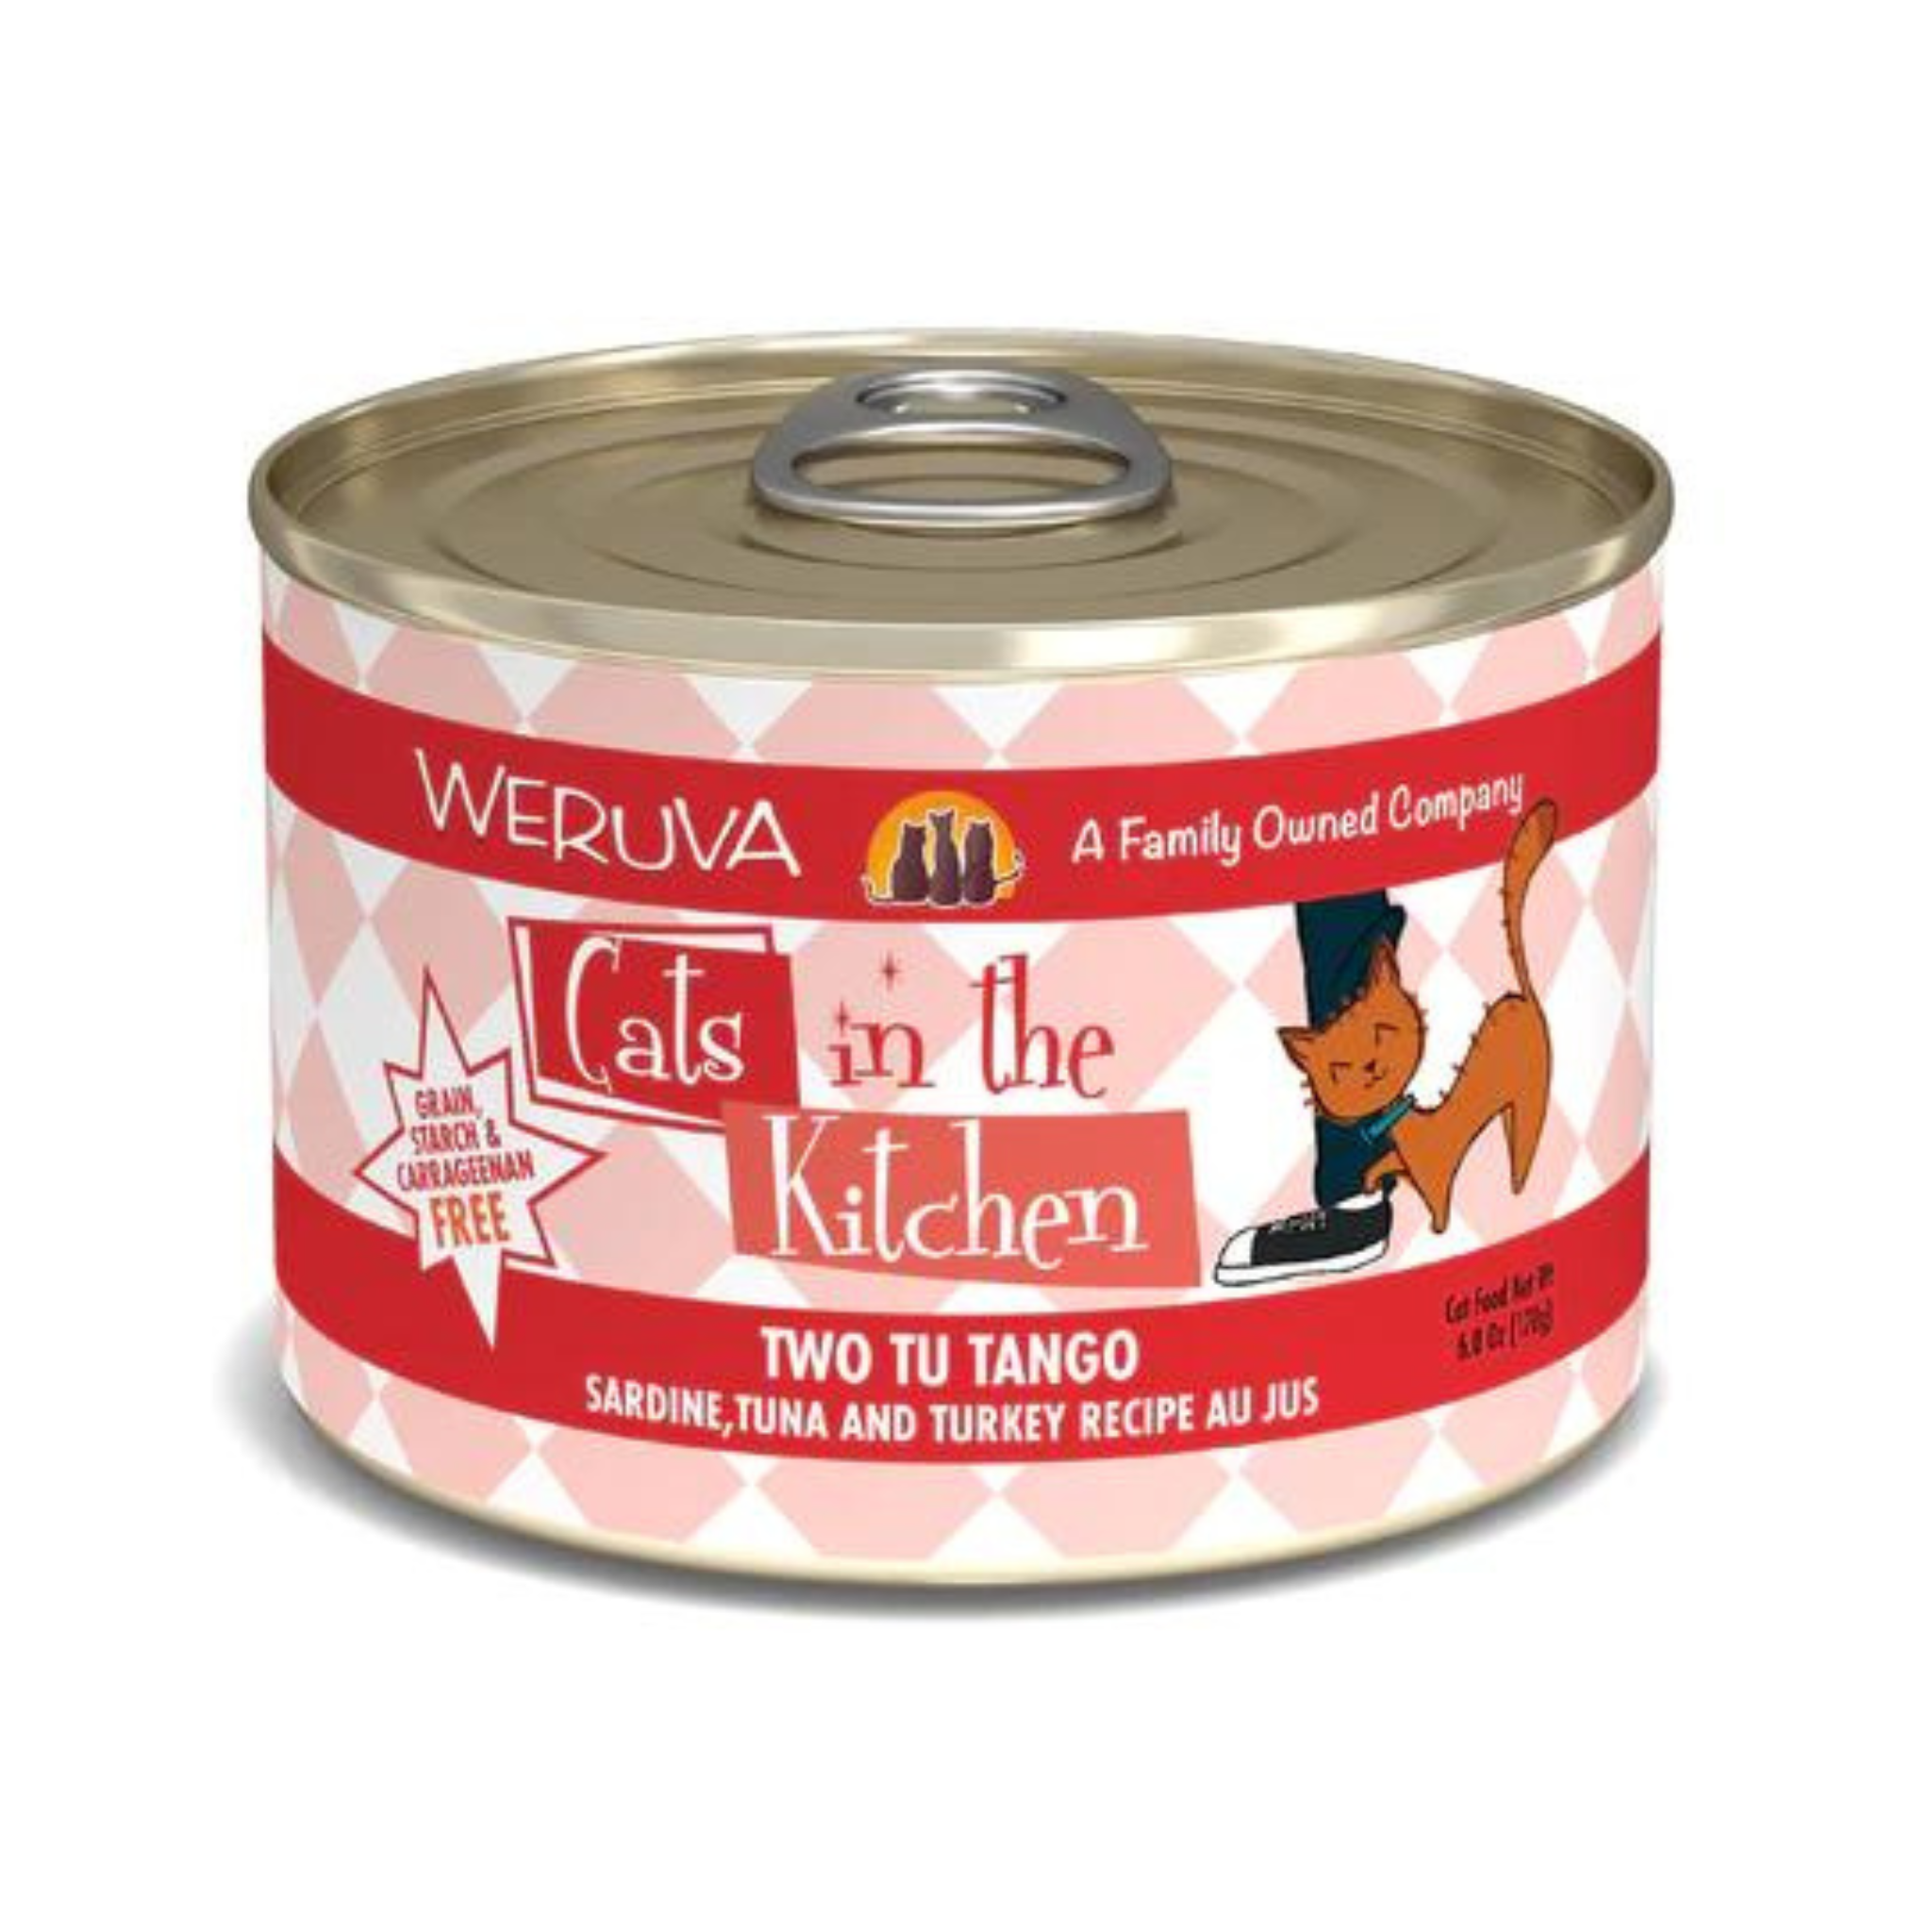 Weruva Cats In The Kitchen Two Tu Tango Sardine, Tuna & Turkey Cat Canned